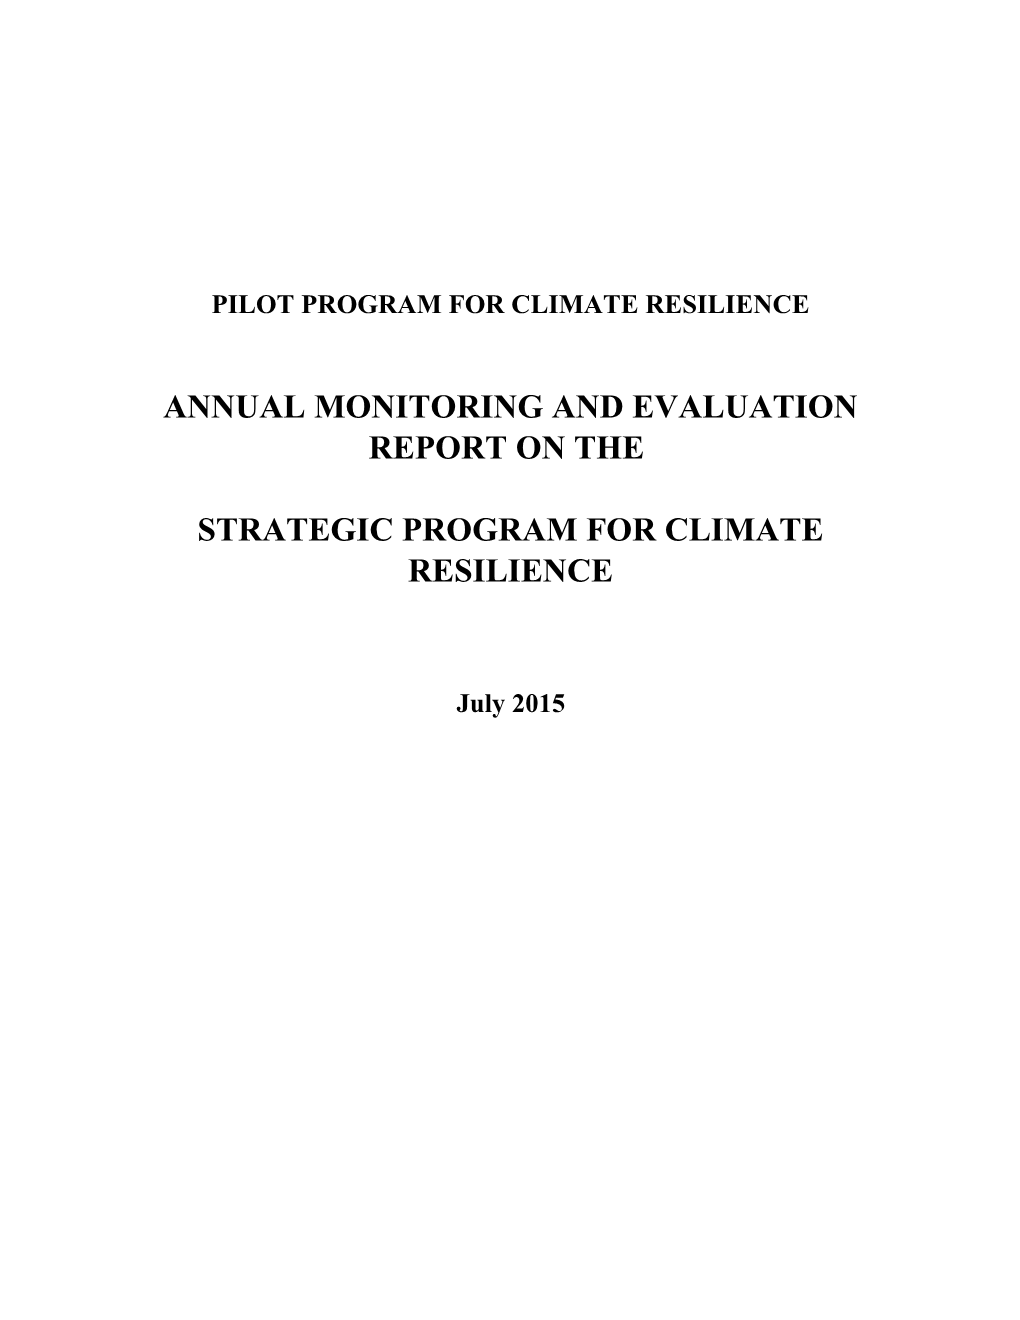 Pilot Program for Climate Resilience